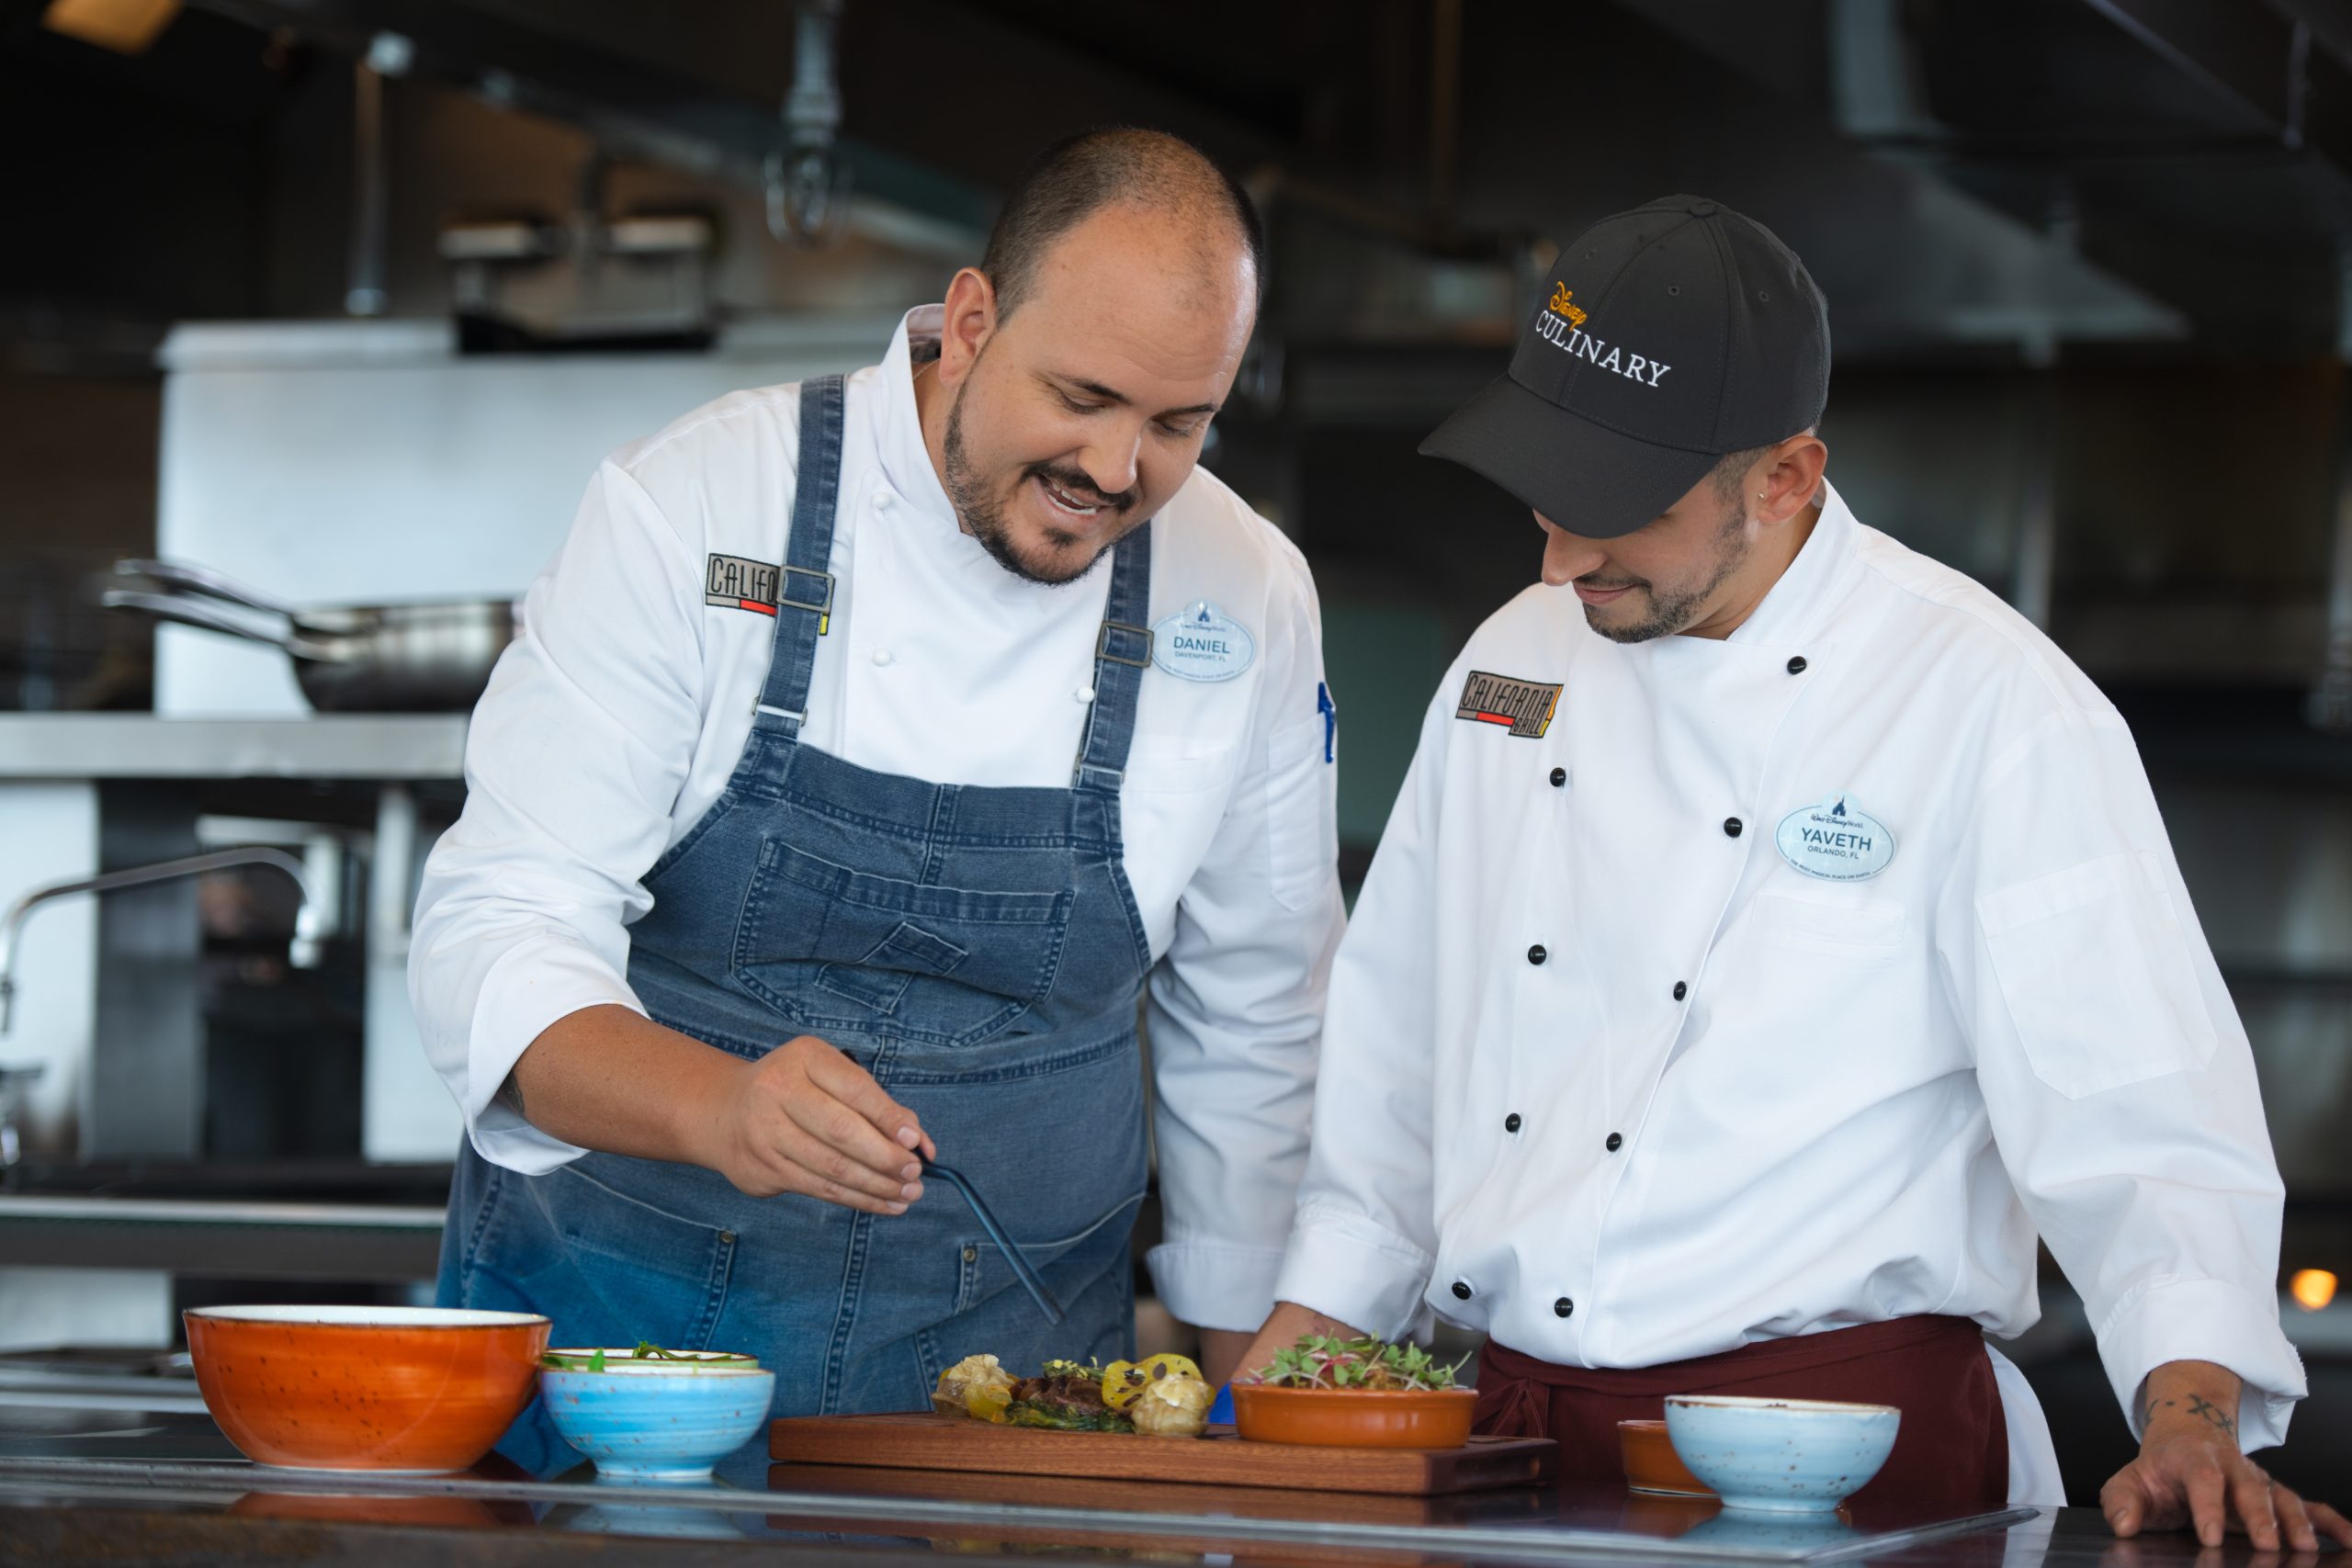 Two Disney Chefs preparing a dish